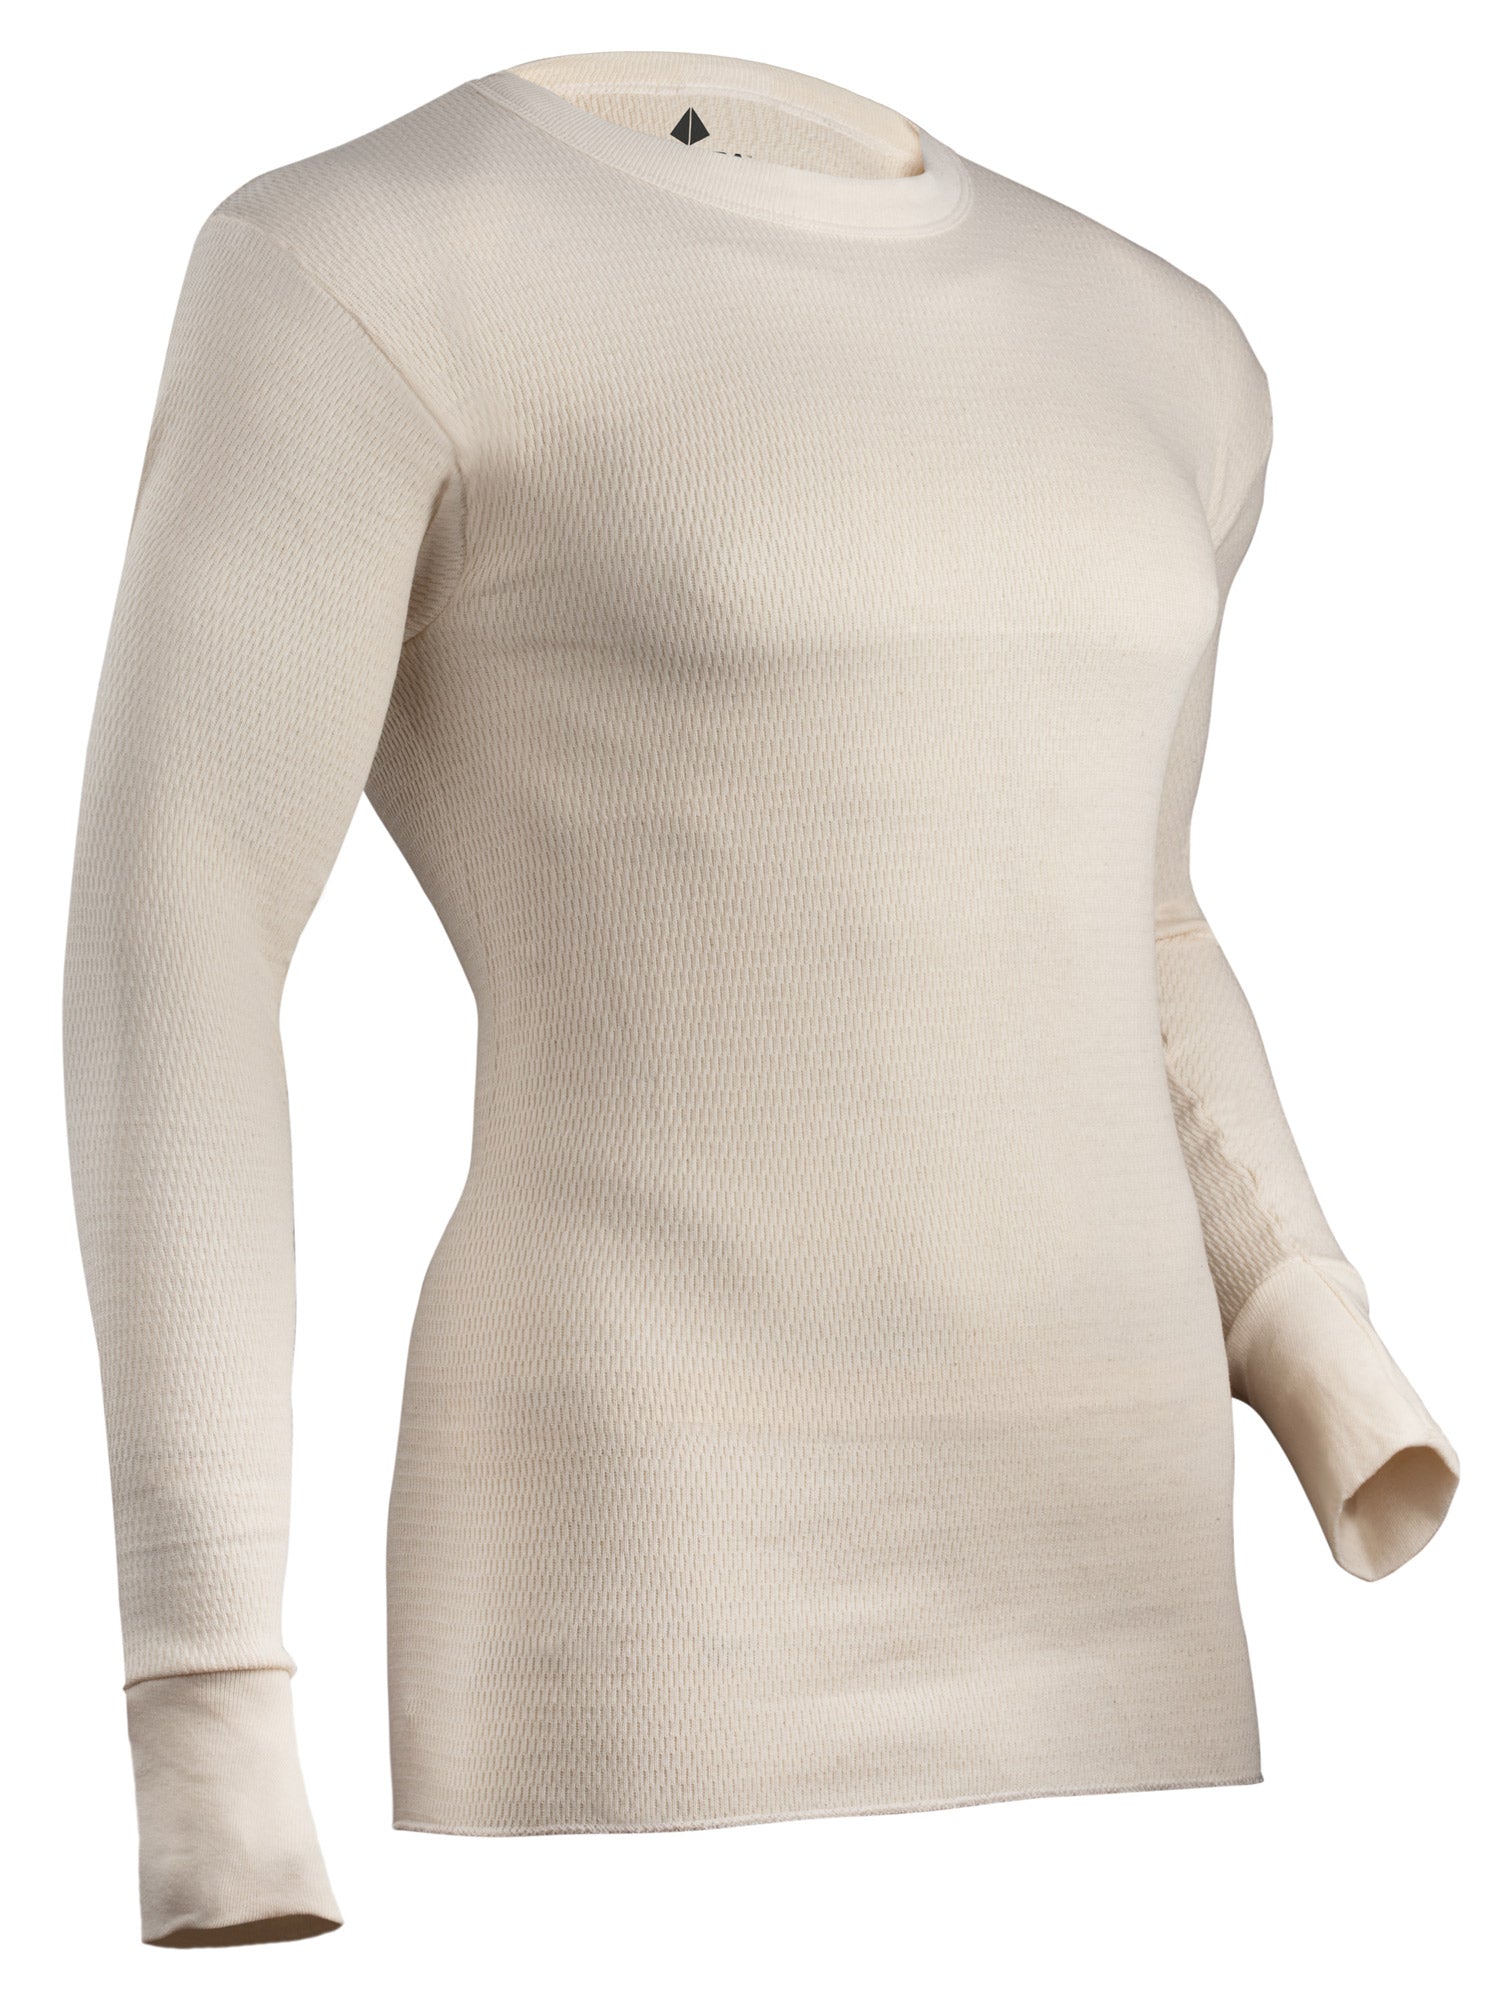 Indera Mills 100% Cotton Military Issue Thermal Crew Shirt - Regular Sizes